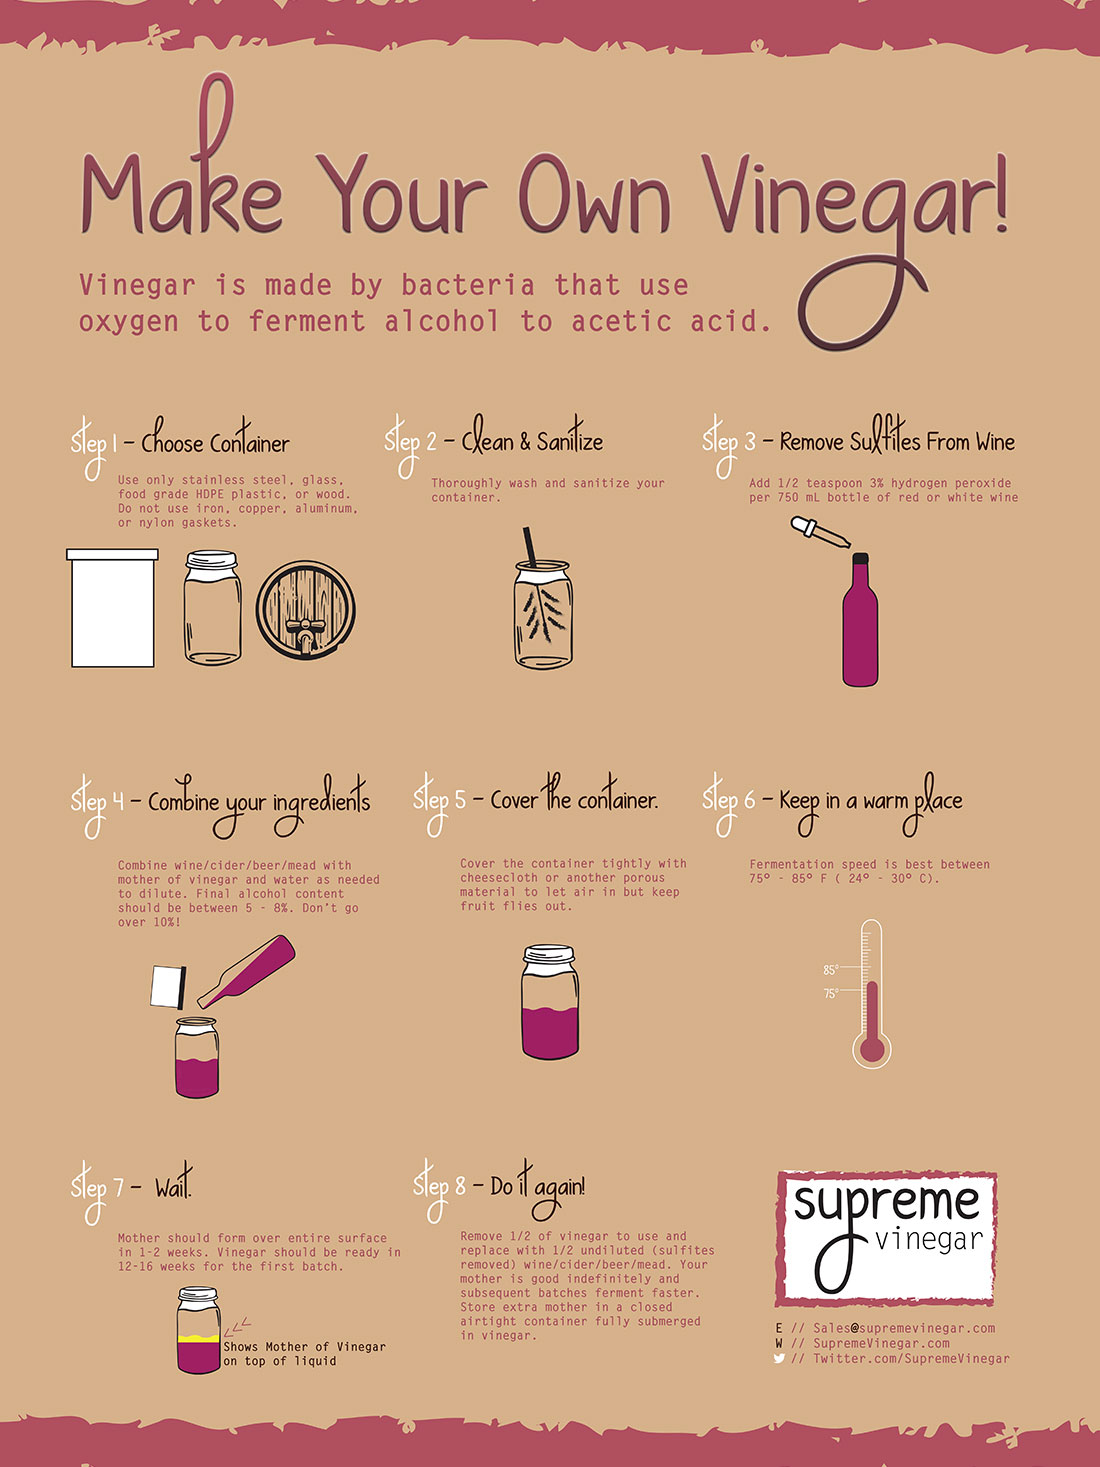 That Creative Guy. Supreme Vinegar Poster Design. brand expert. graphic design. web design in mississippi. 